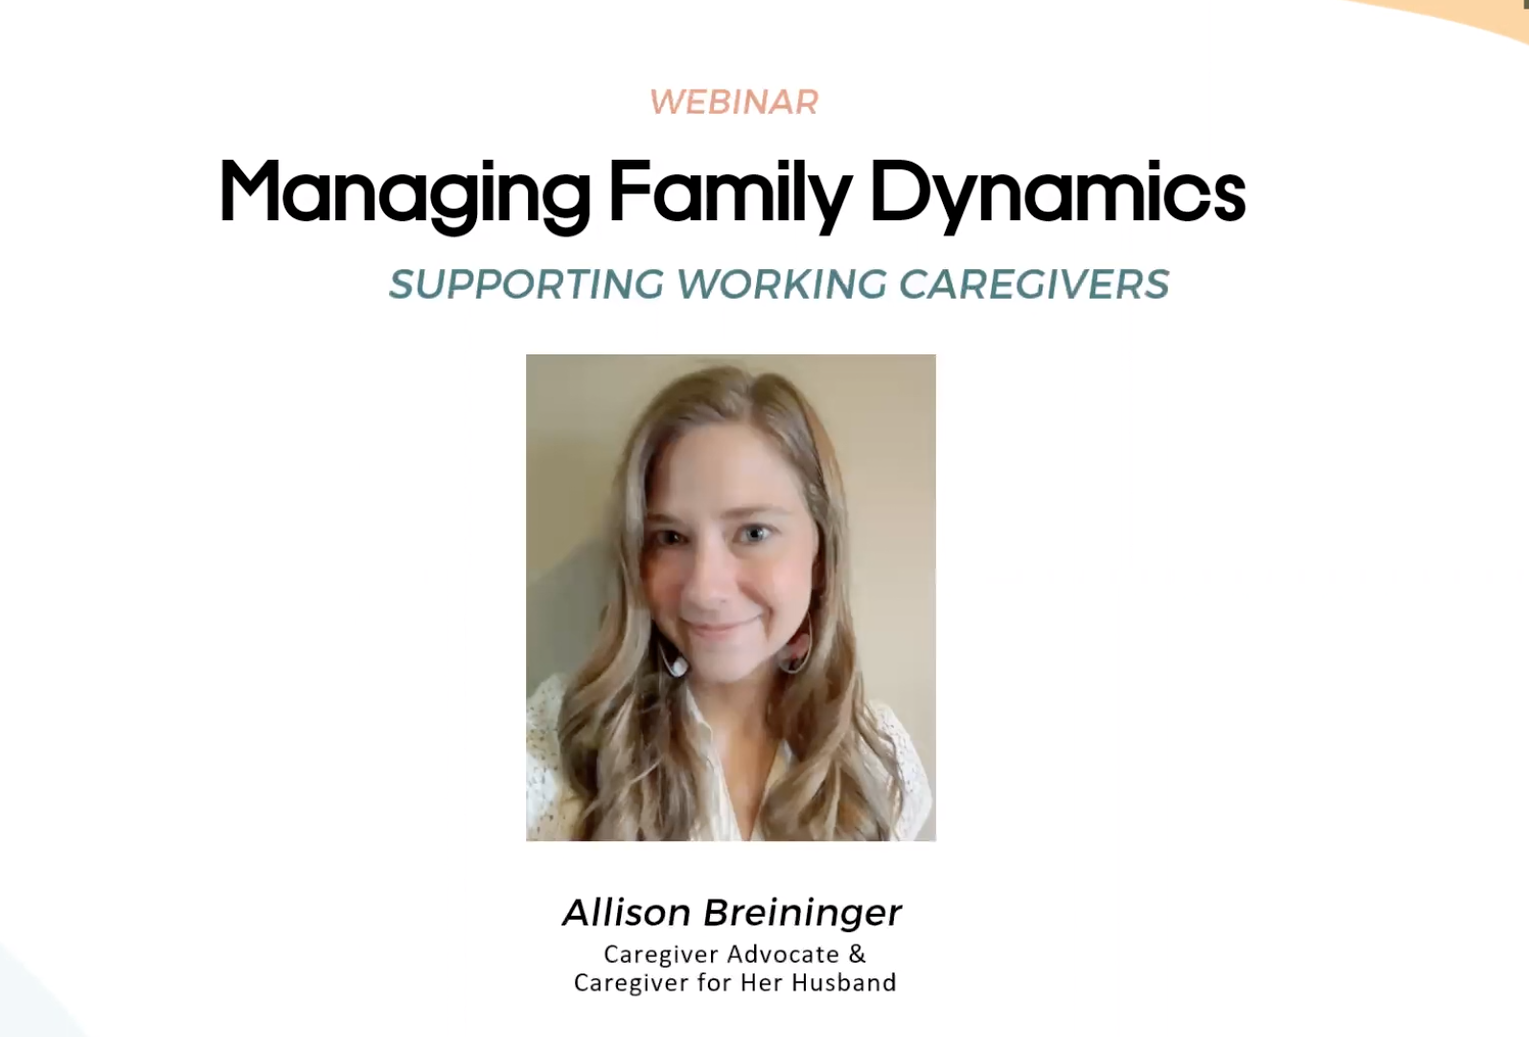 Watch: Managing Family Dynamics